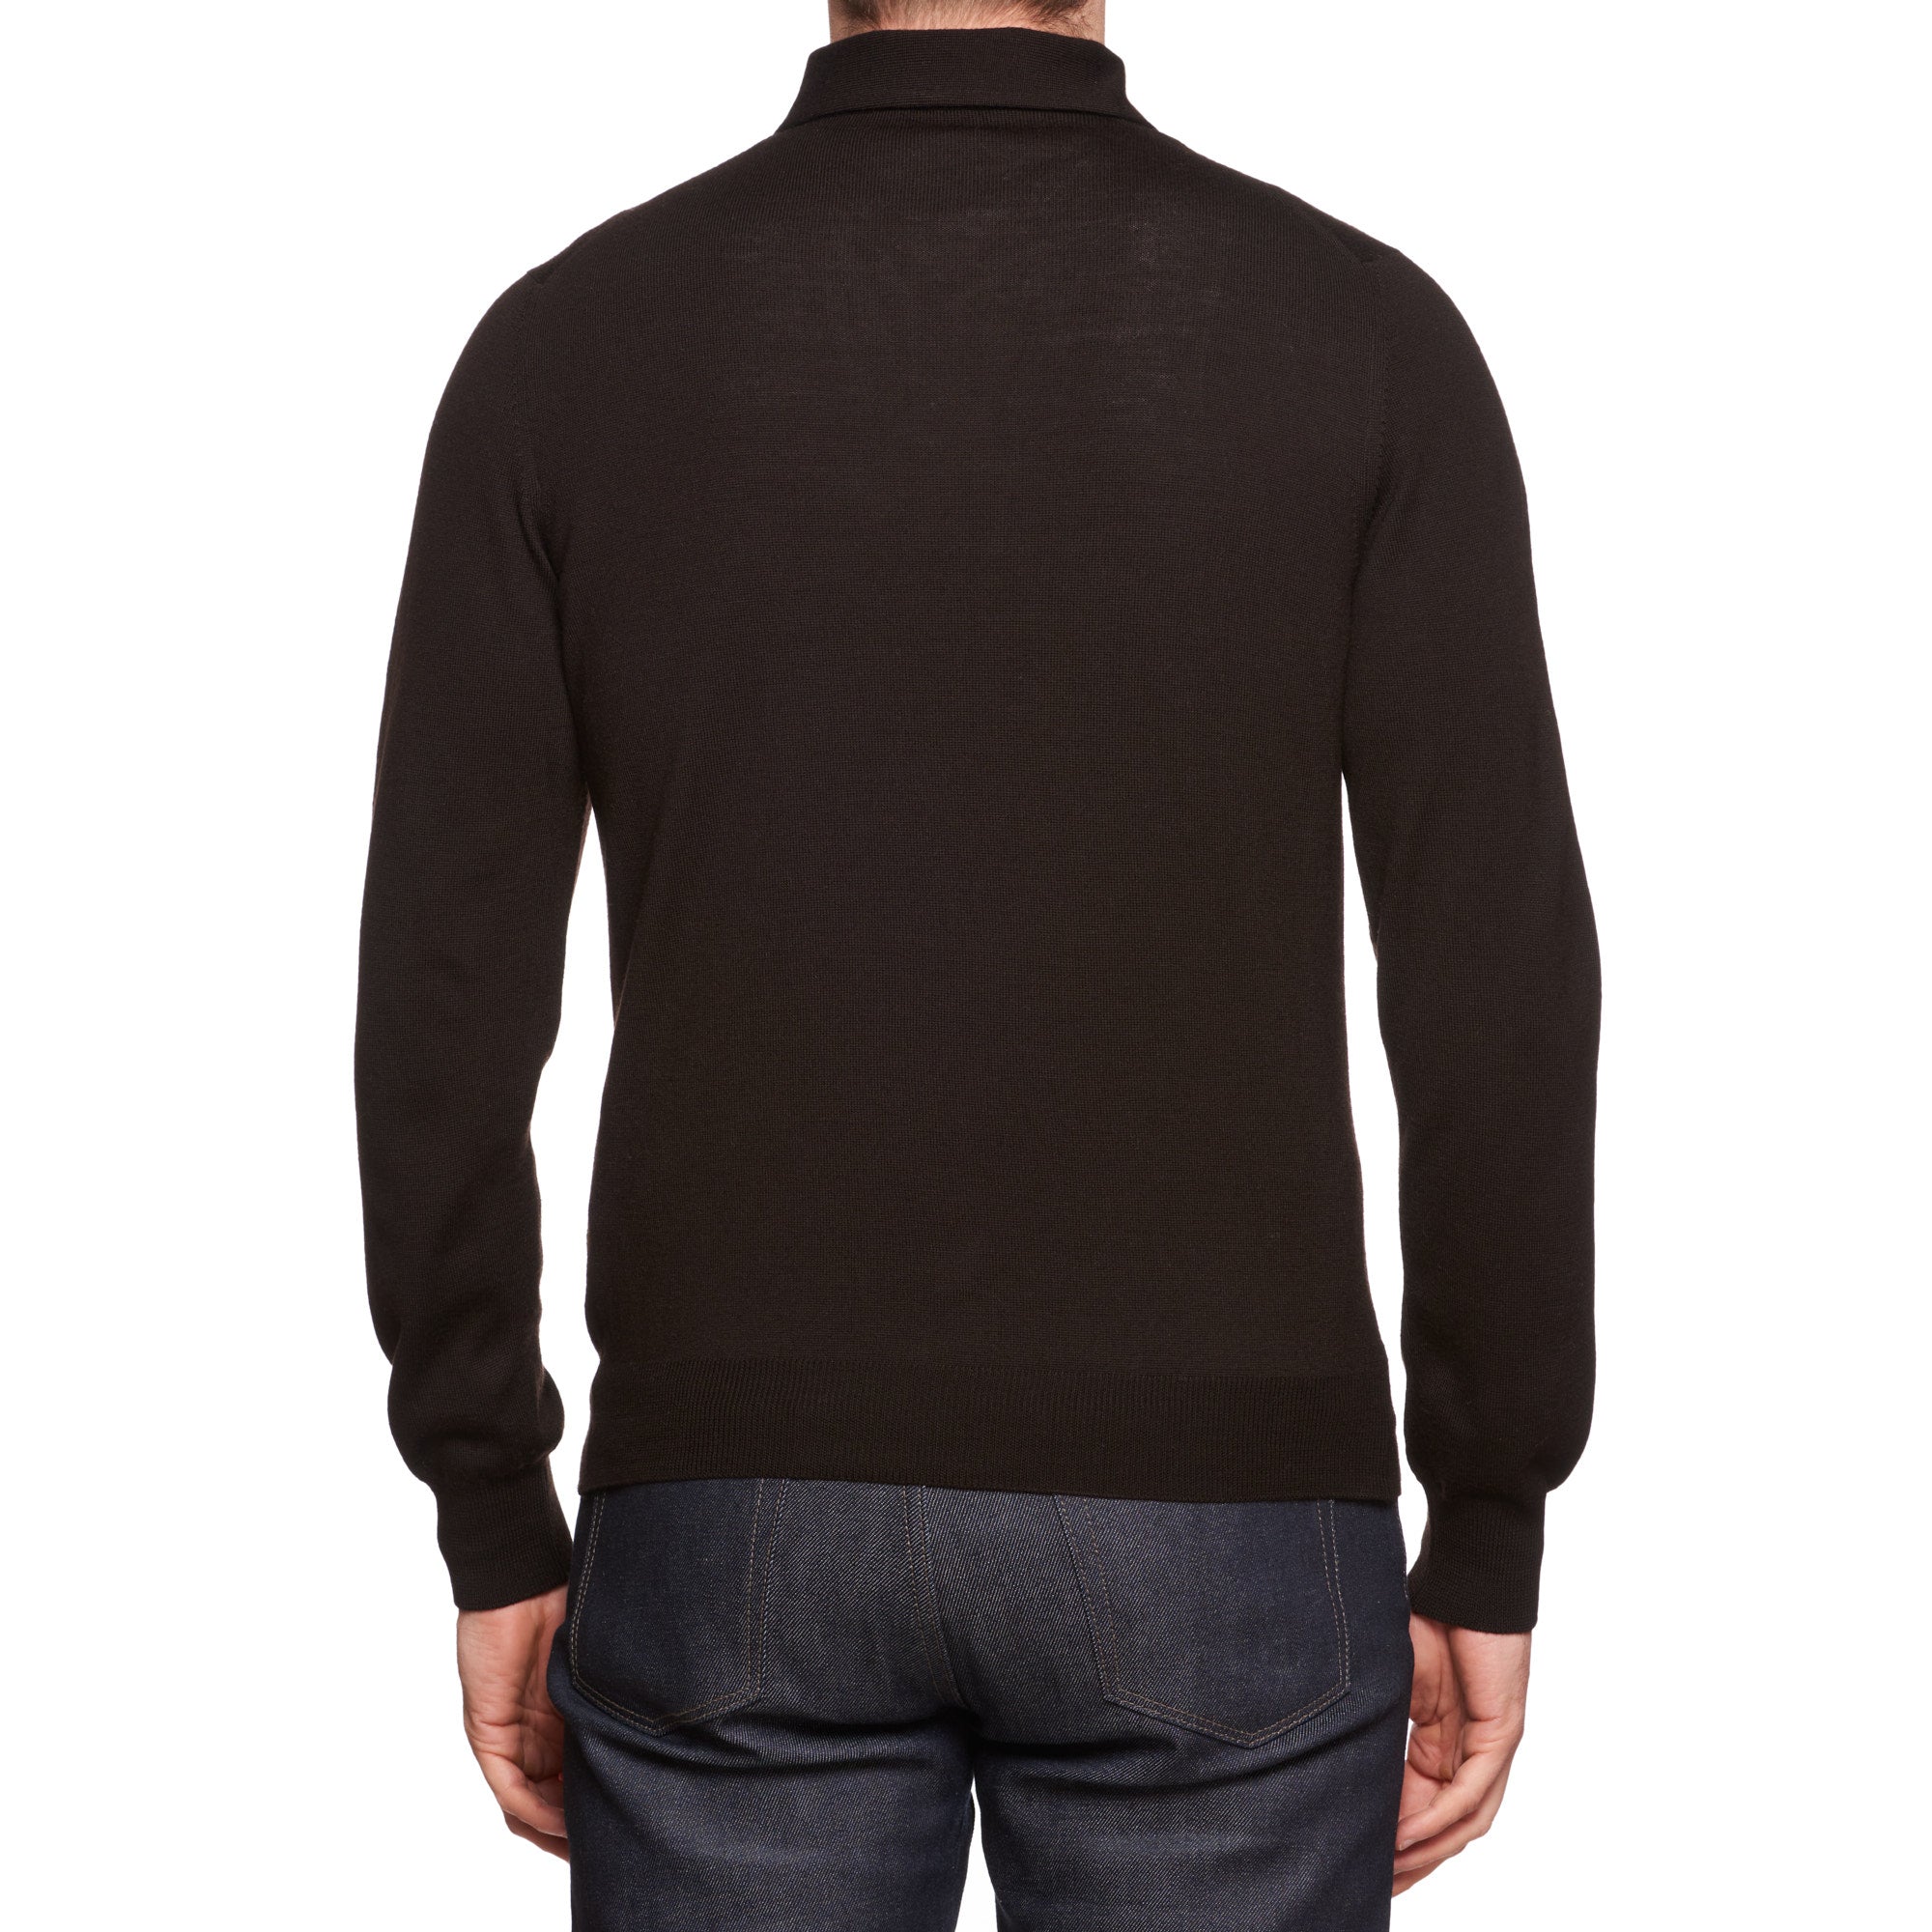 GRAN SASSO Dark Brown Virgin Wool Knit Button-Down Sweater EU 48 US S GRAN SASSO